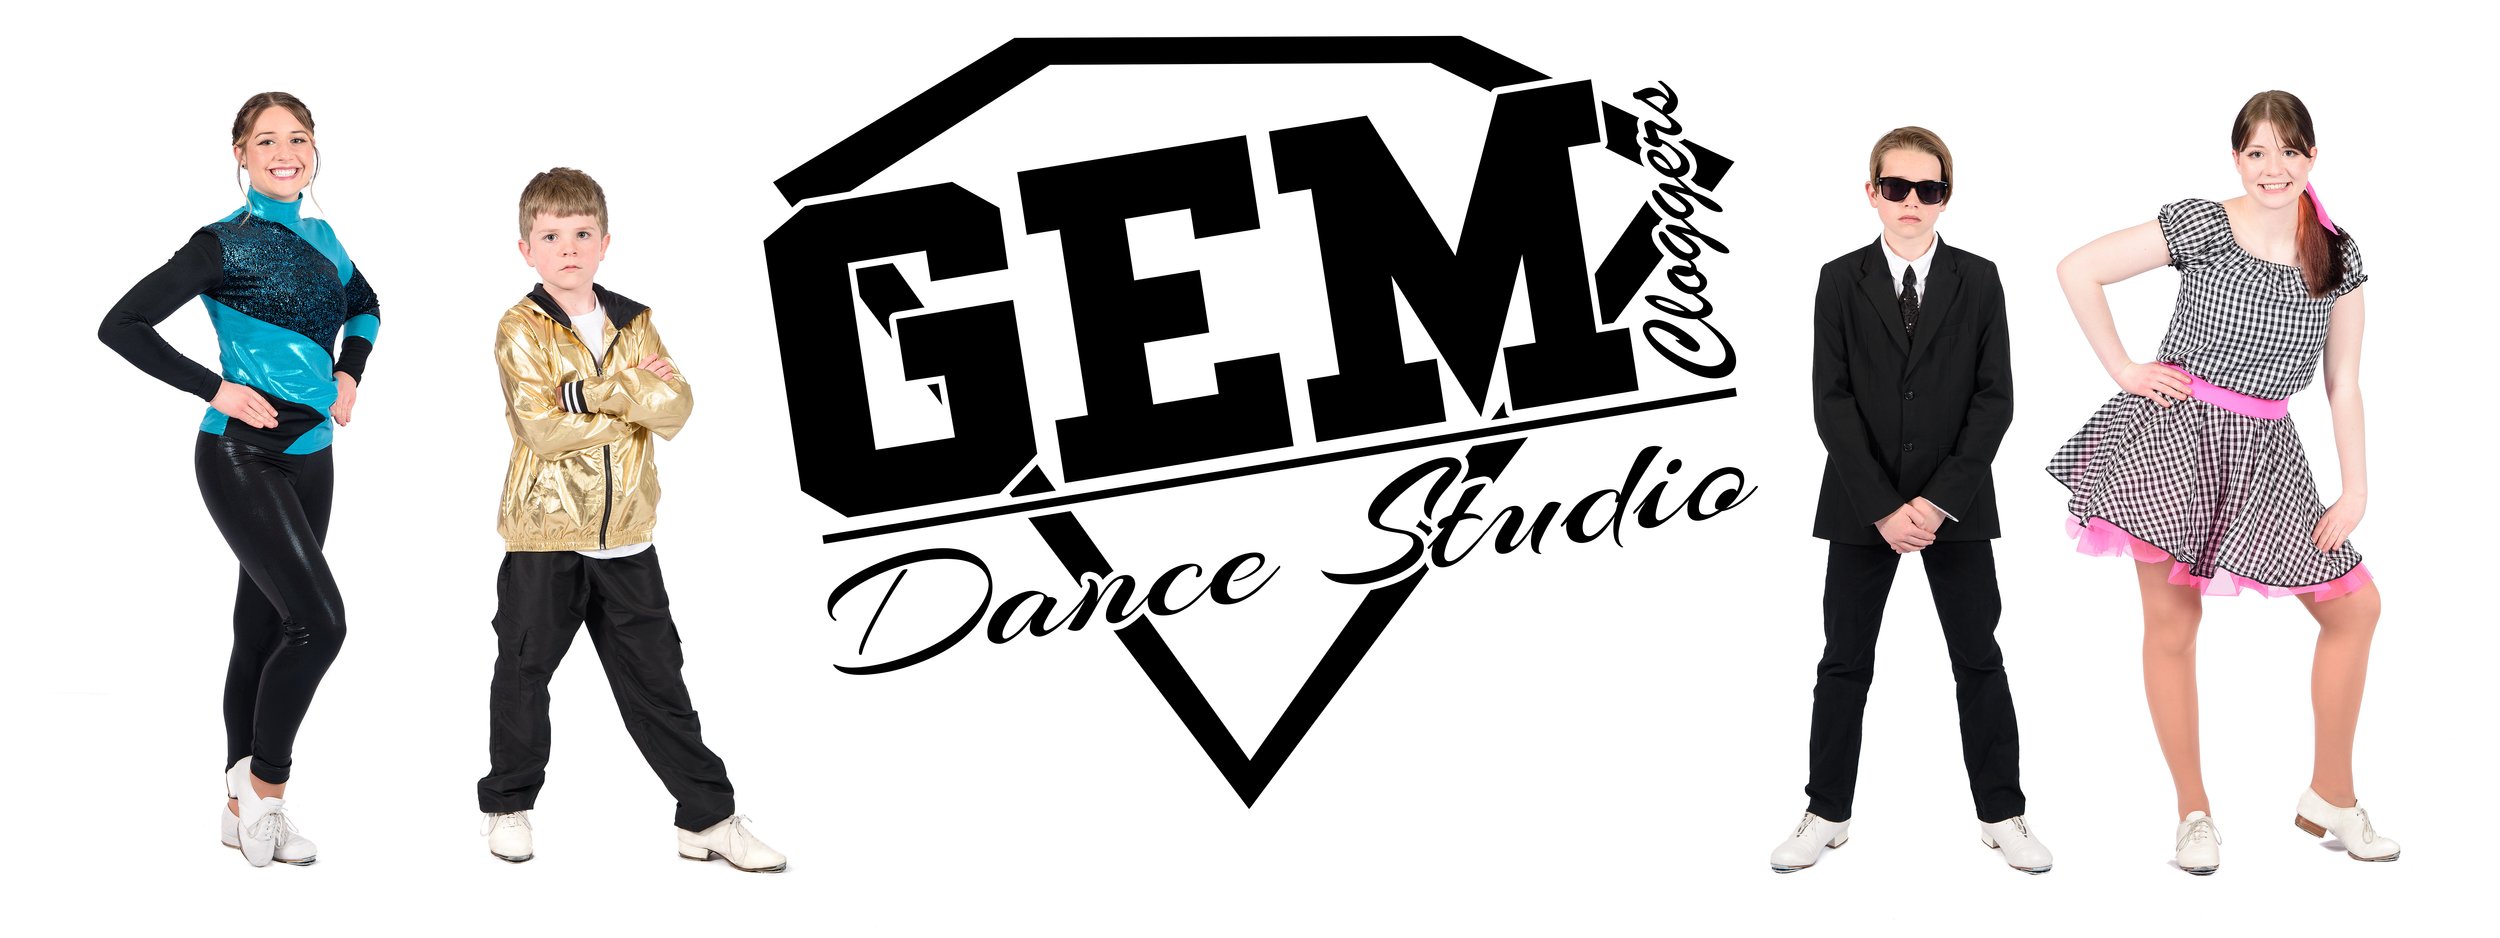 Black dance studio - Gem